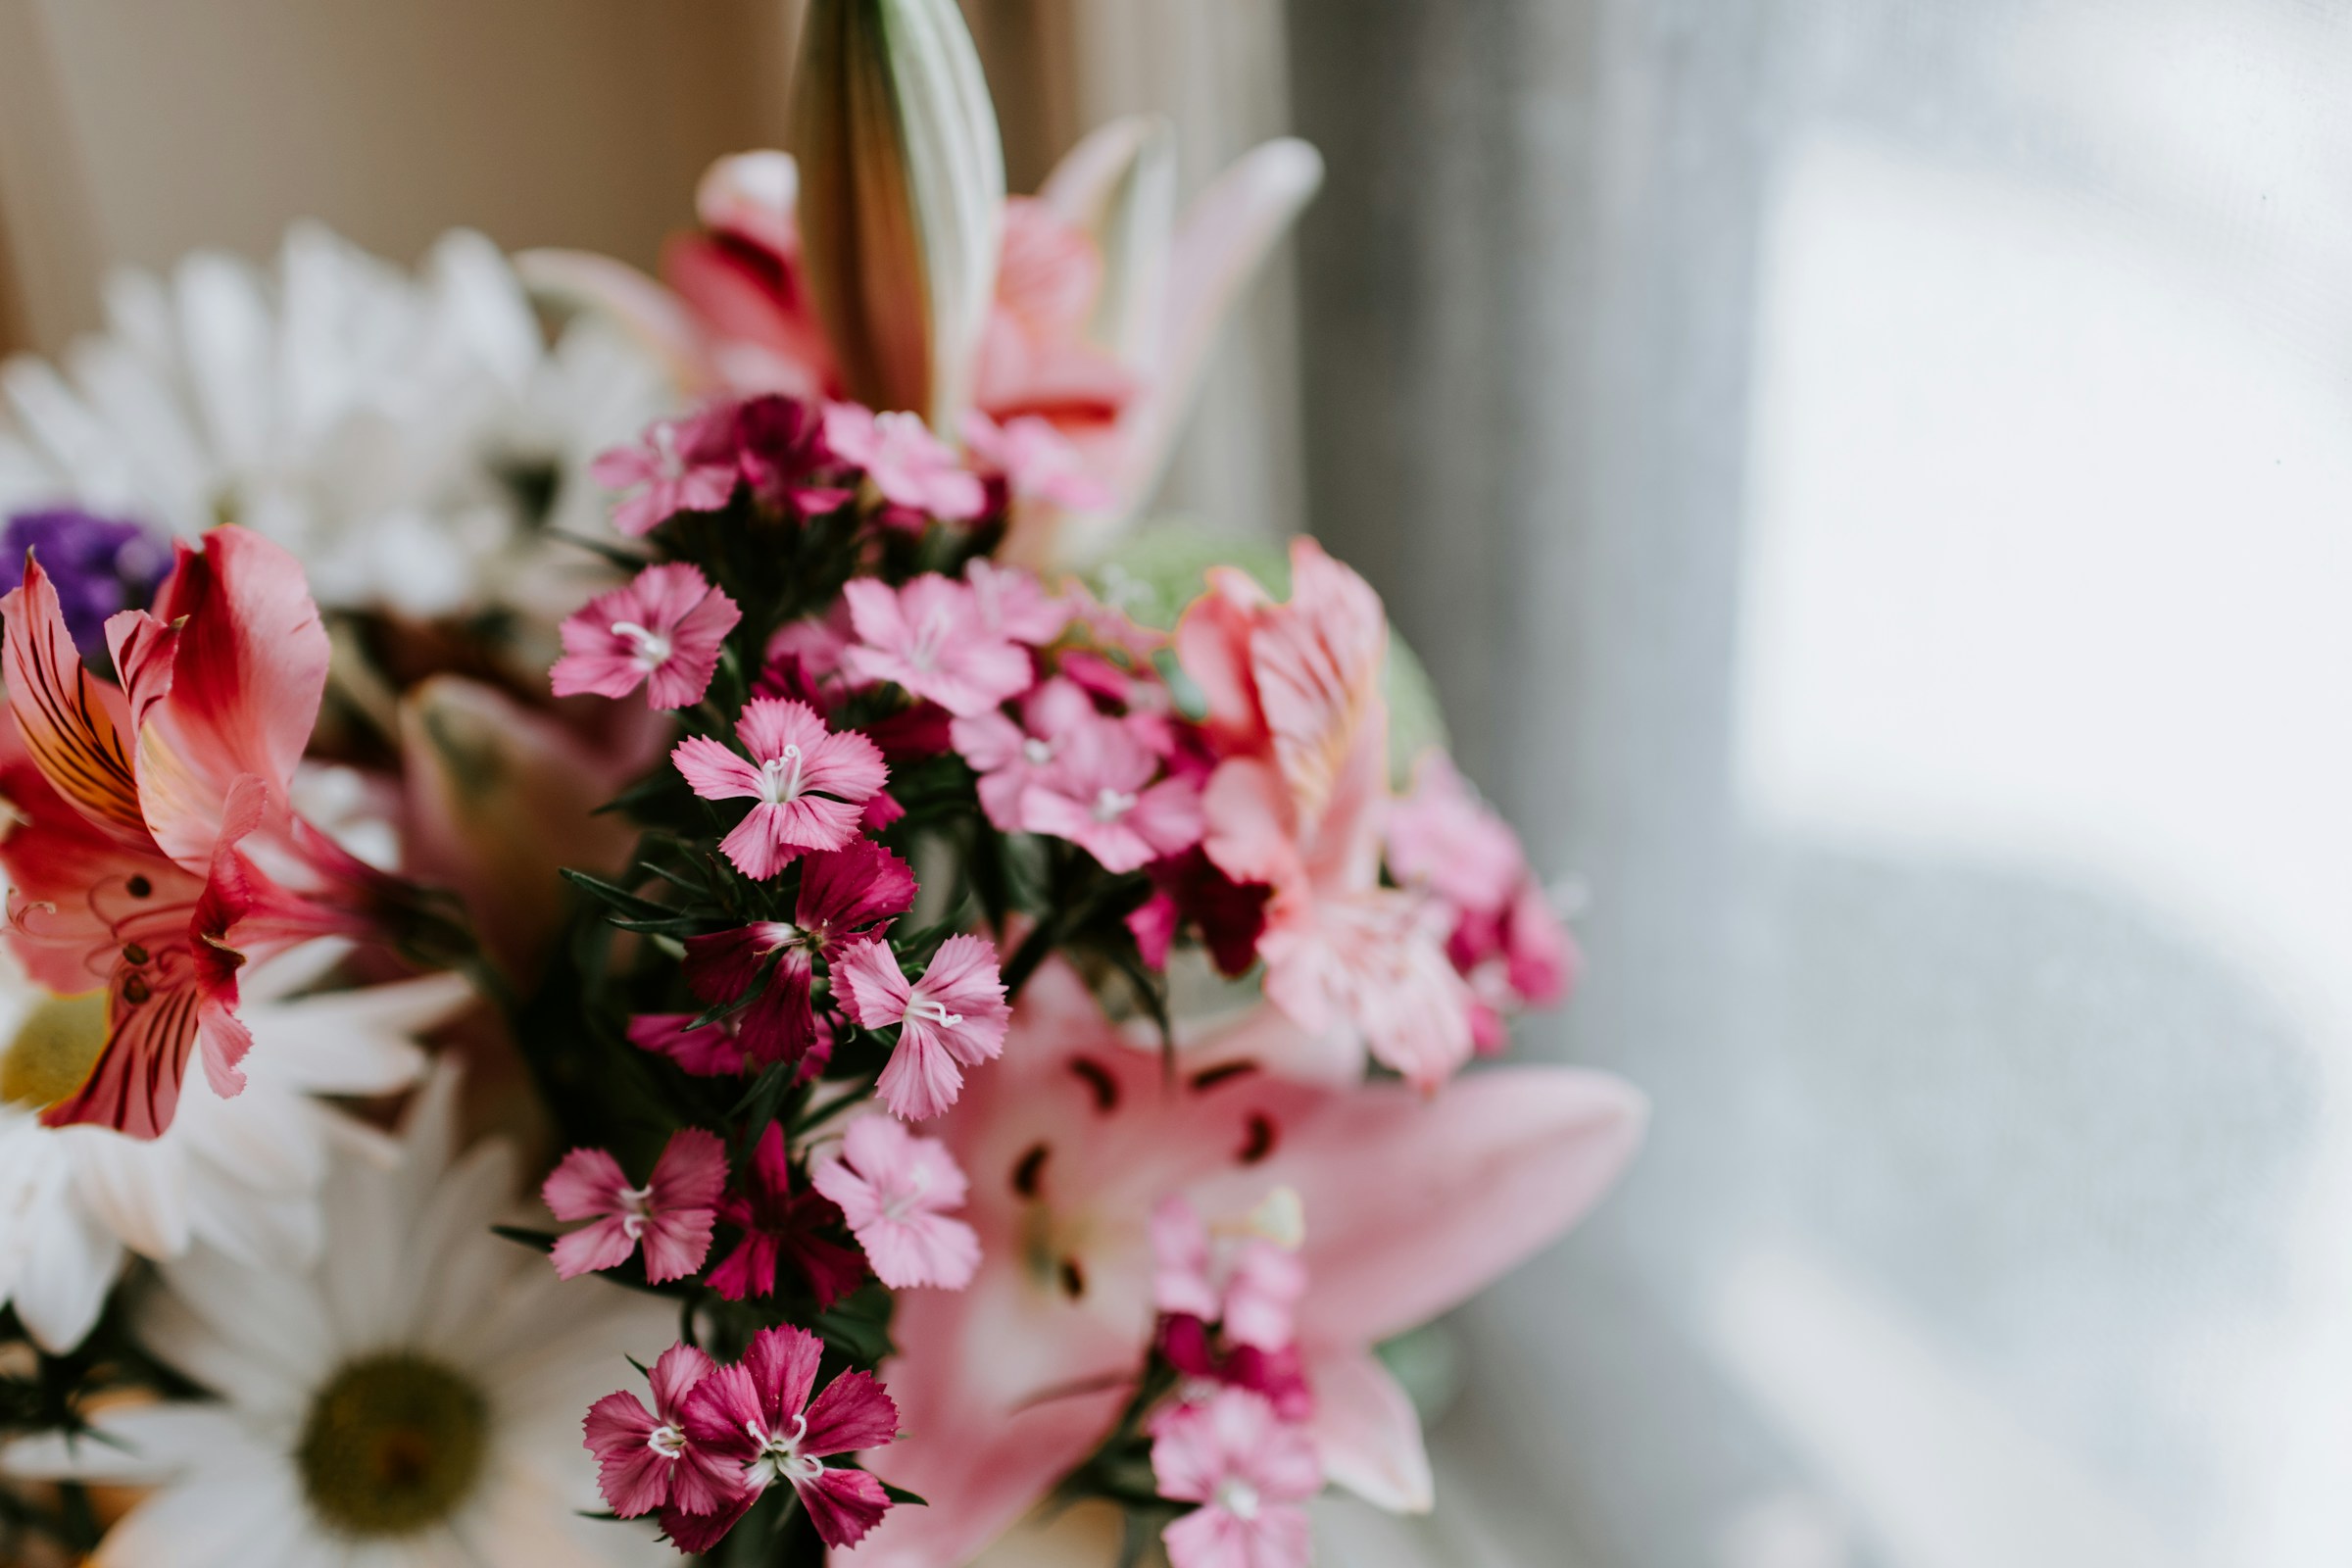 Bouquet of flowers | Source: Pexels